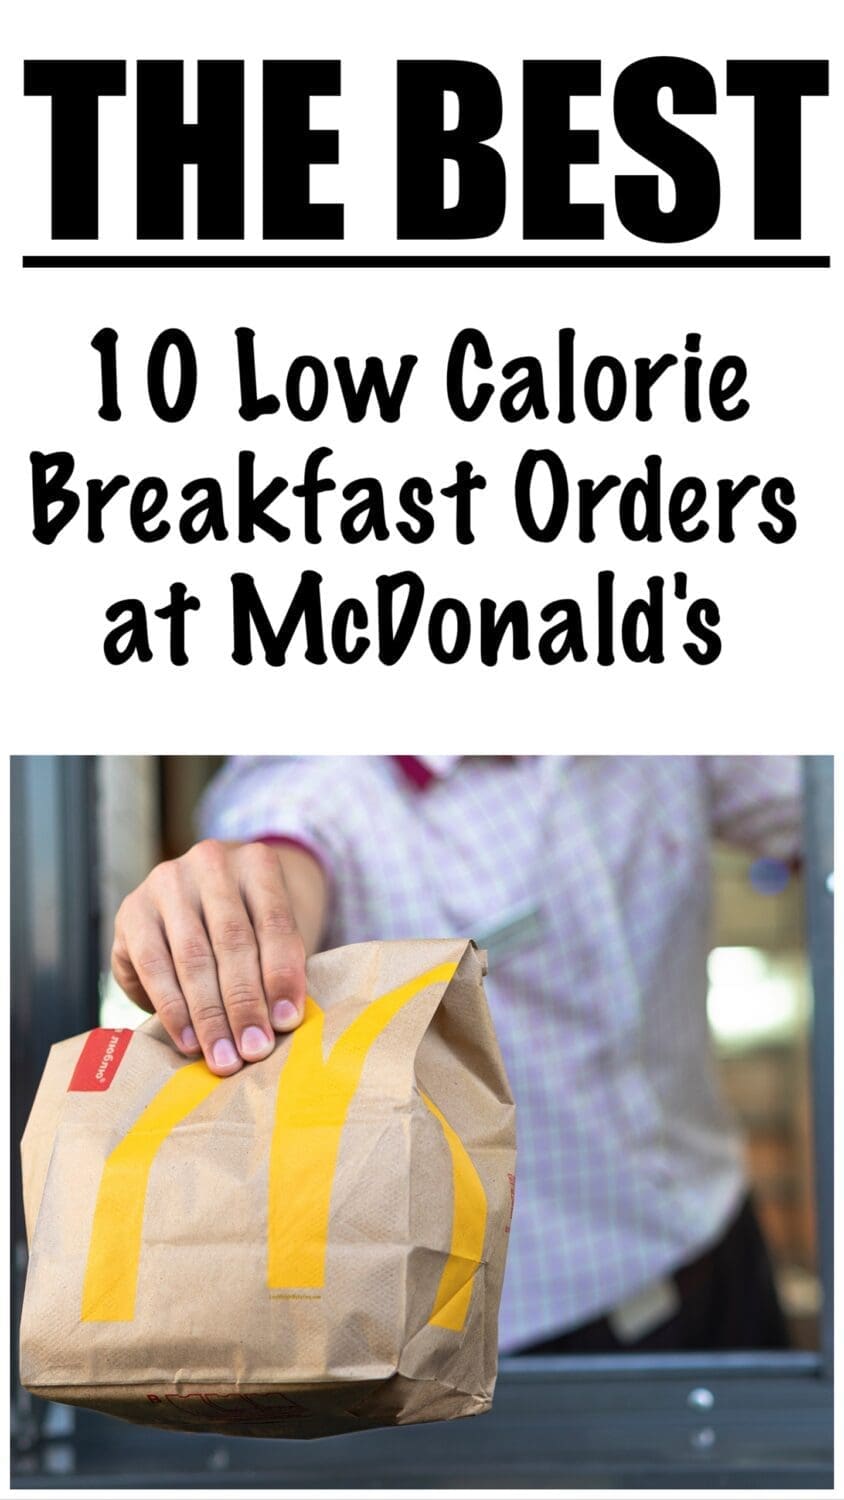 10 Low Calorie Breakfast Orders at McDonald's